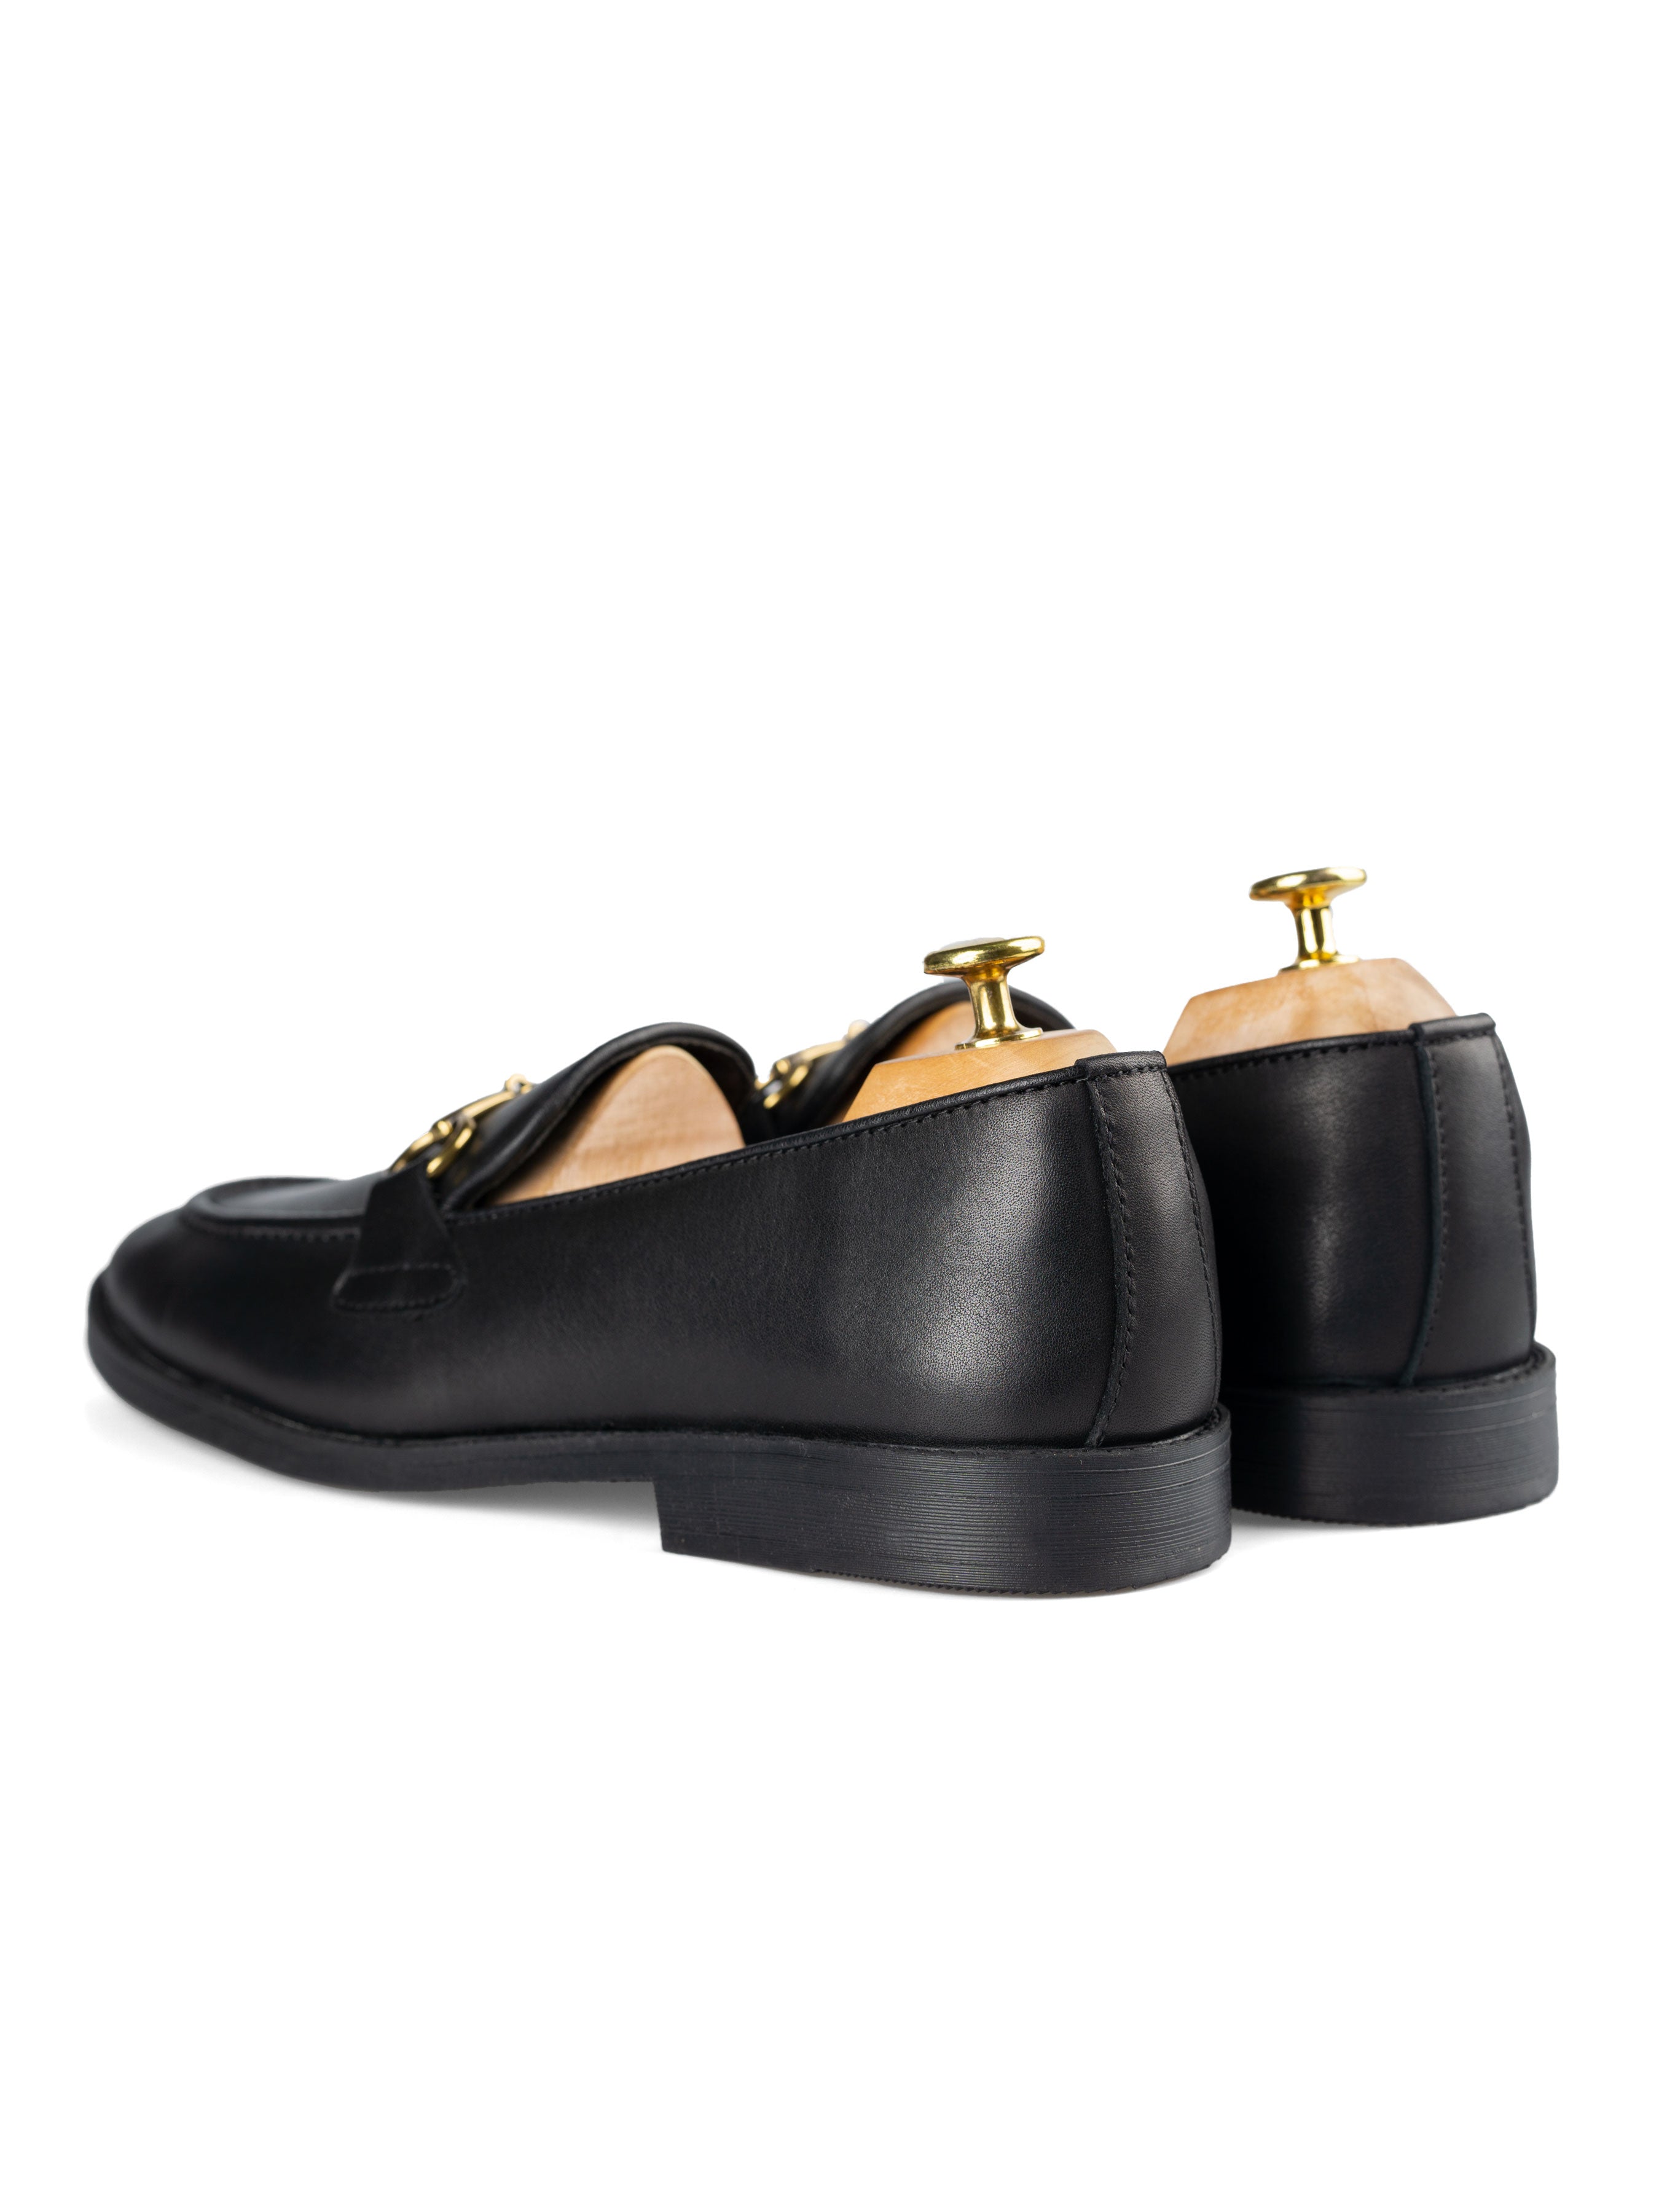 Horsebit Buckle Loafer - Solid Black Leather (Flexi-Sole) - Zeve Shoes